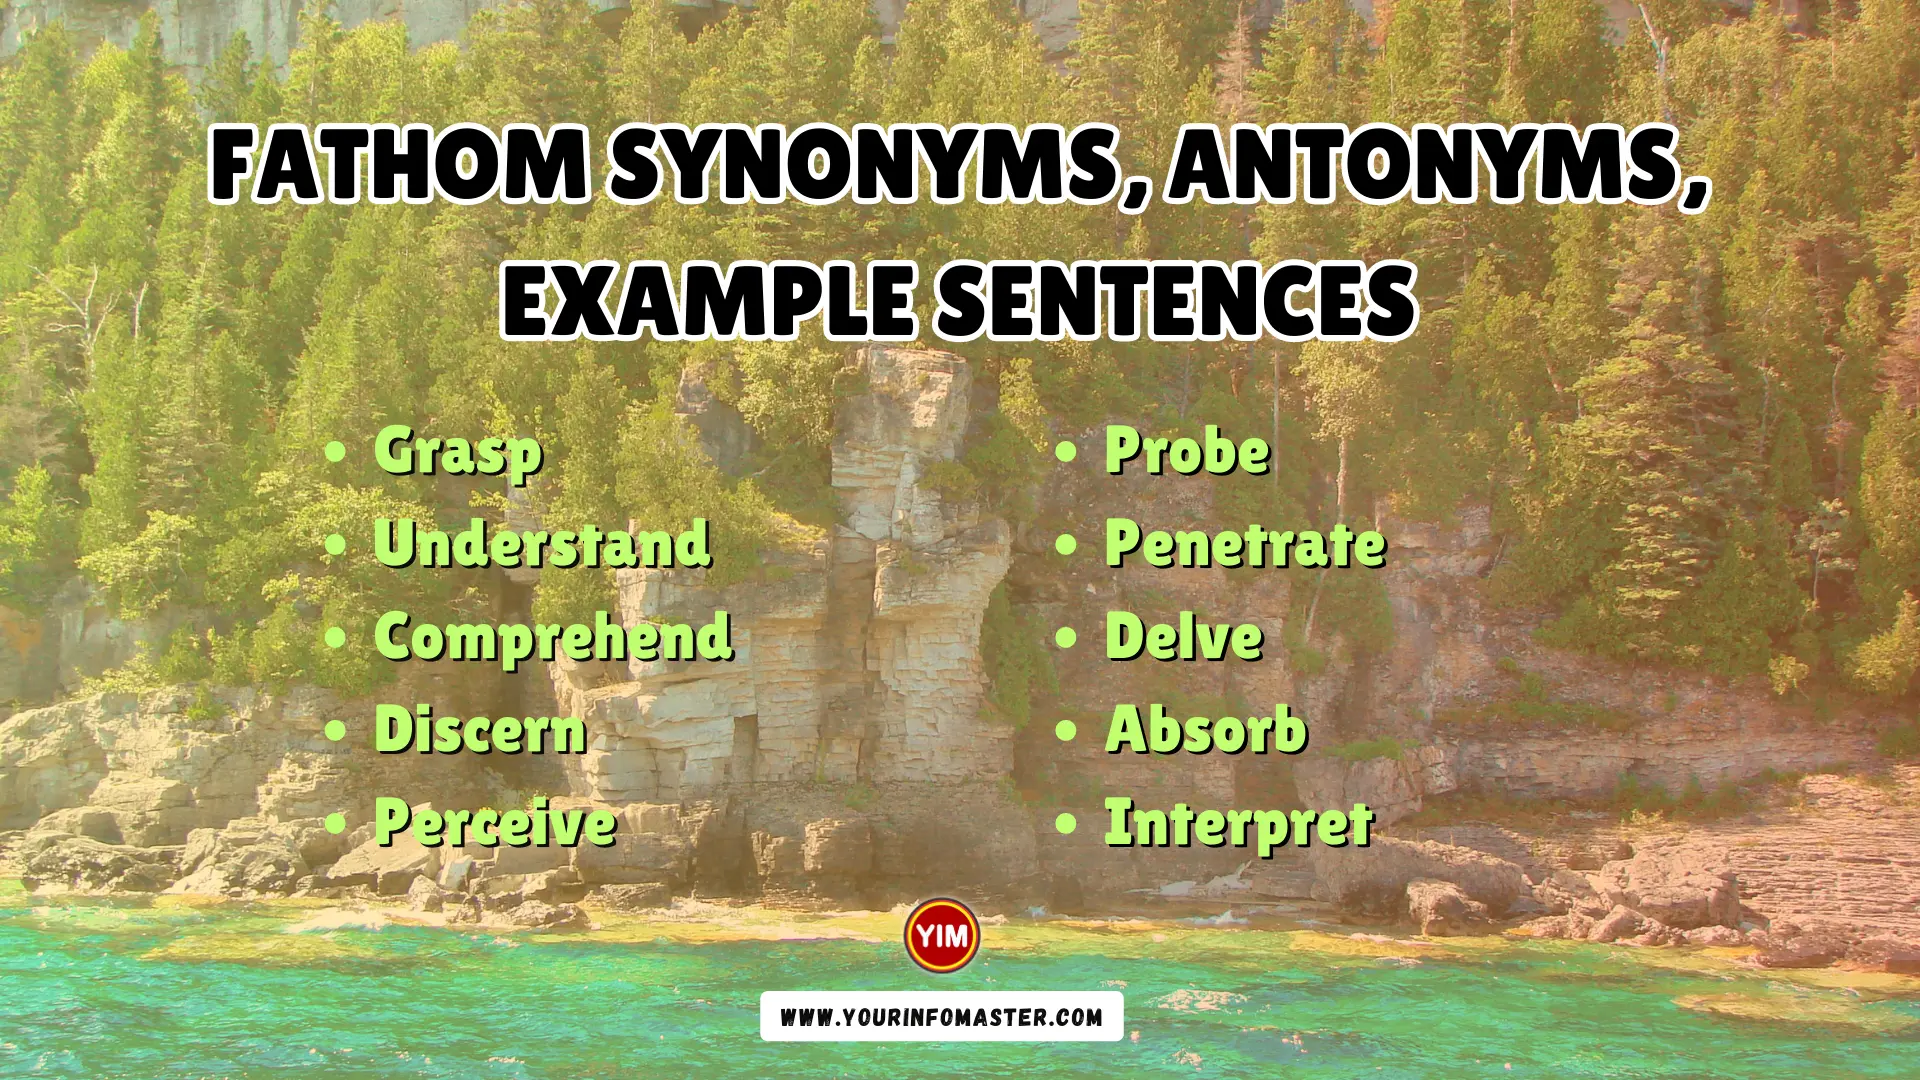 Fathom Synonyms, Antonyms, Example Sentences